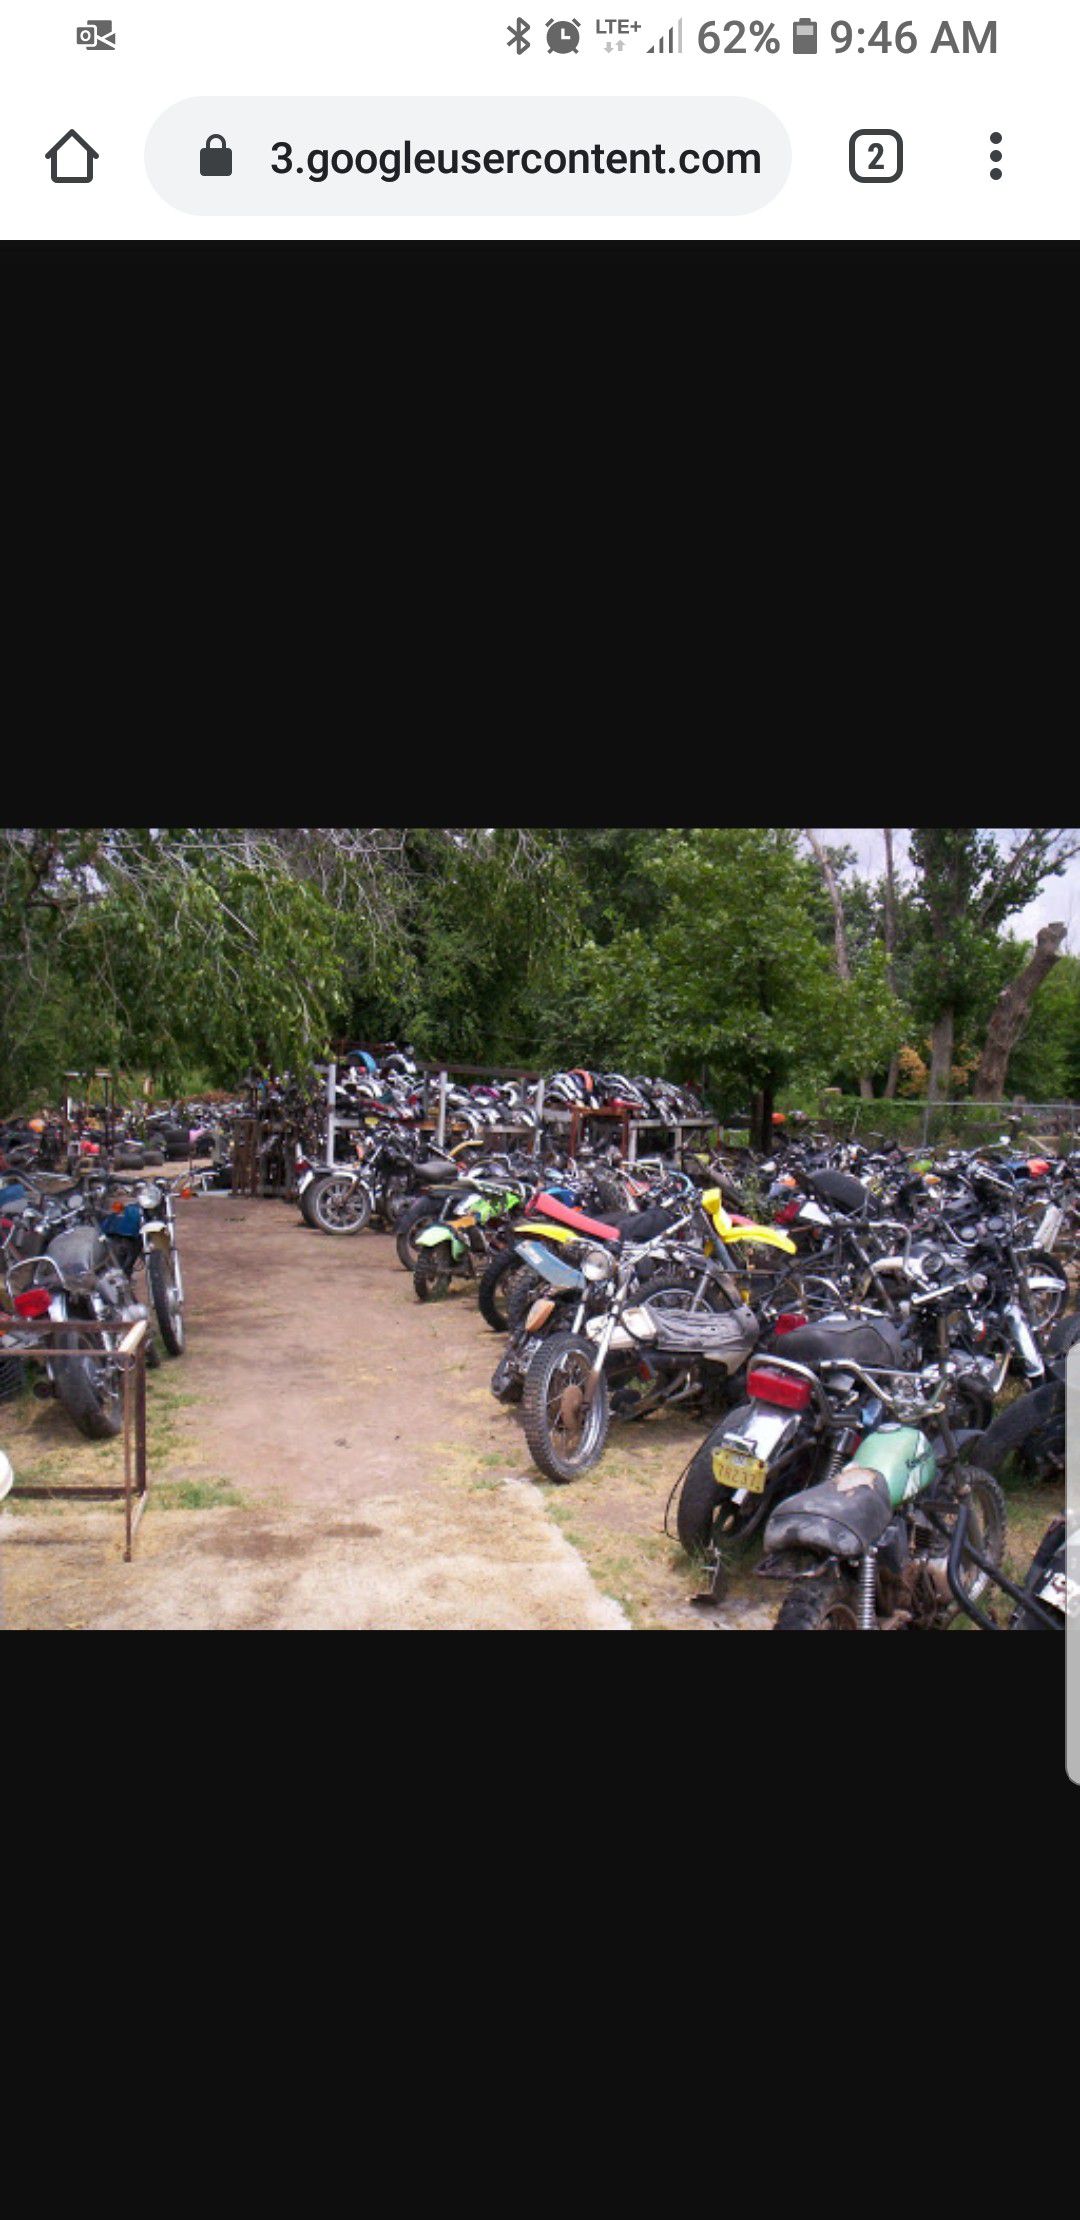 Motorcycle salvage yard